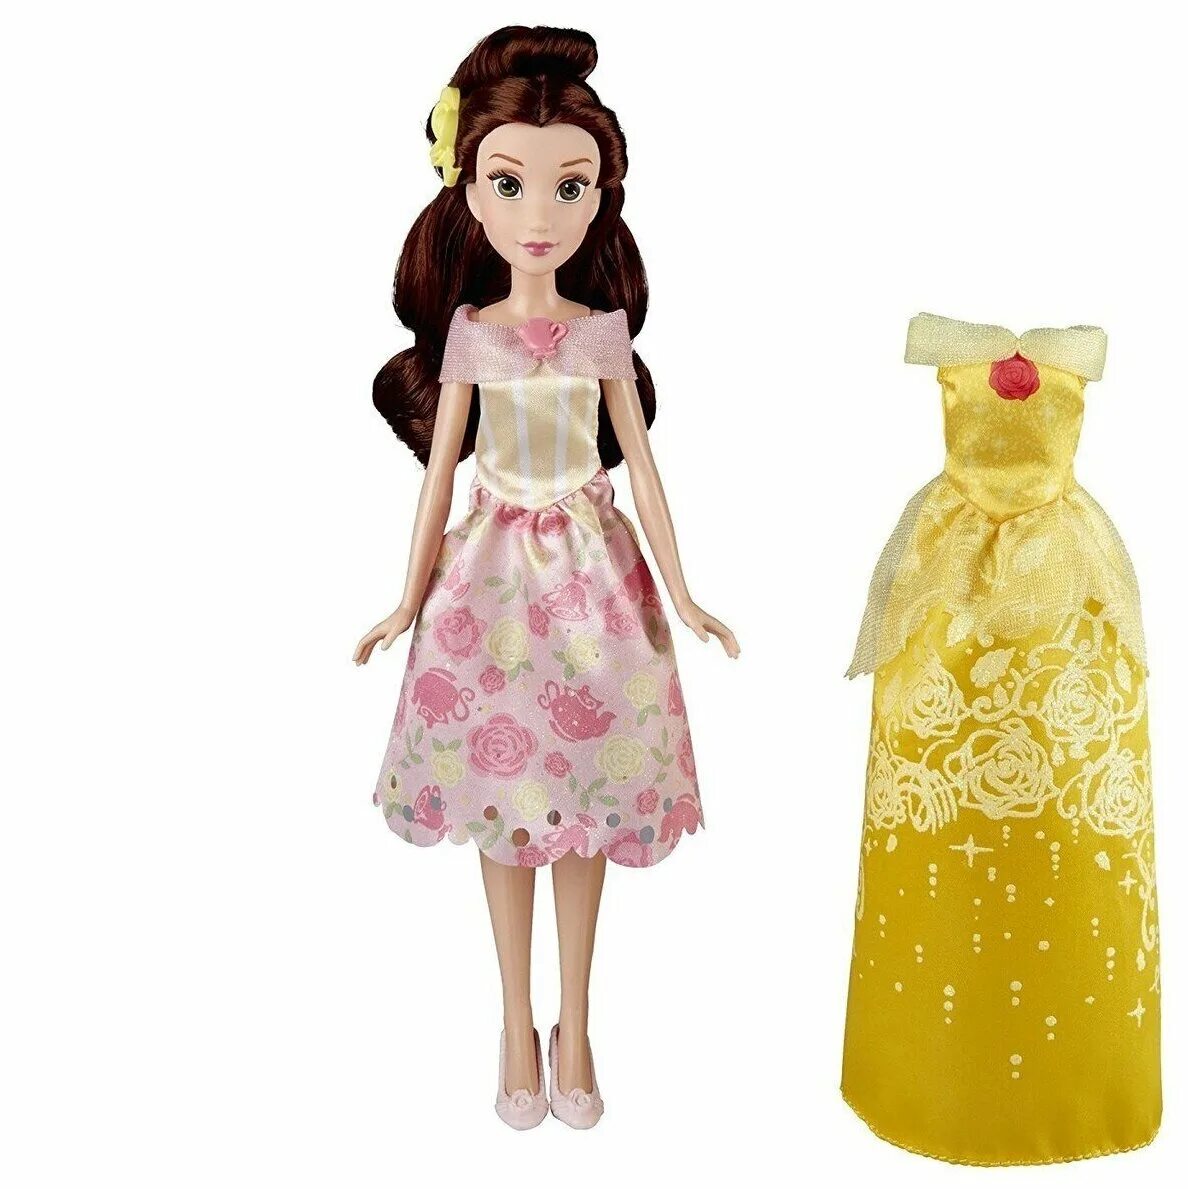 Куклы дисней купить. Кукла Disney Princess Белль. Кукла Бель от Хасбро. Куклы Хасбро принцессы Дисней. Кукла Бель Дисней Хасбро.